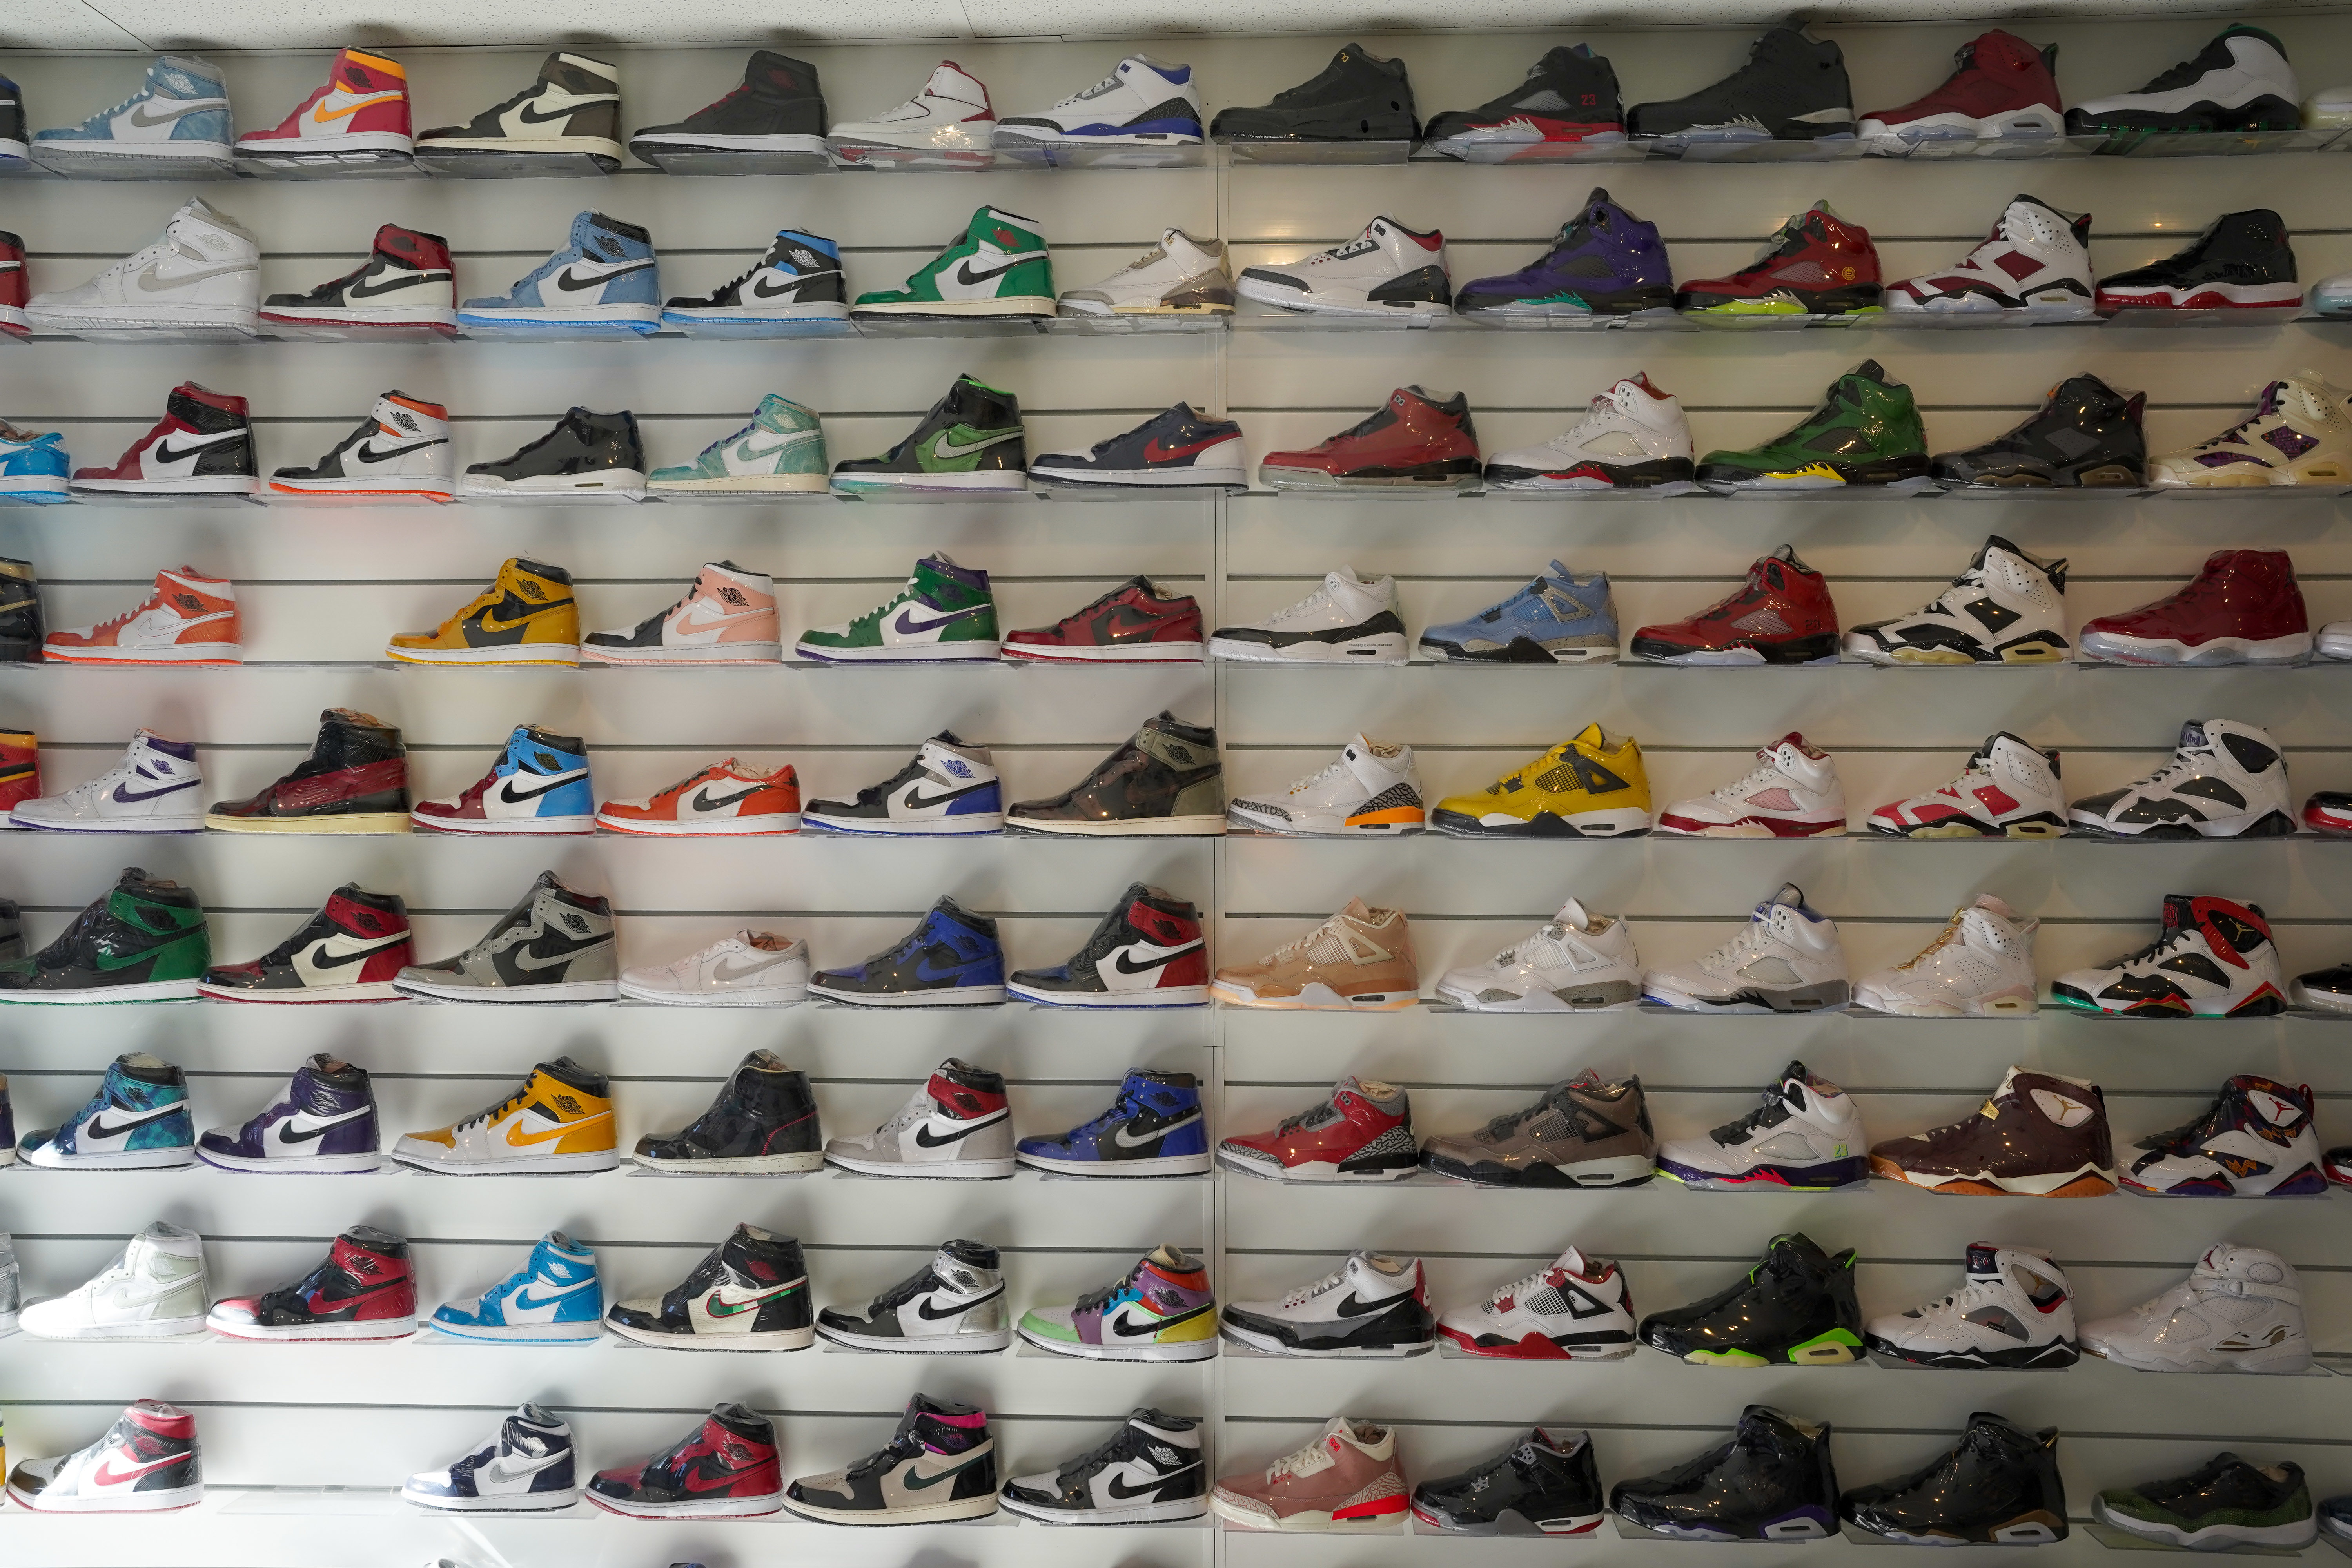 The 10 best sneaker stores in Philadelphia